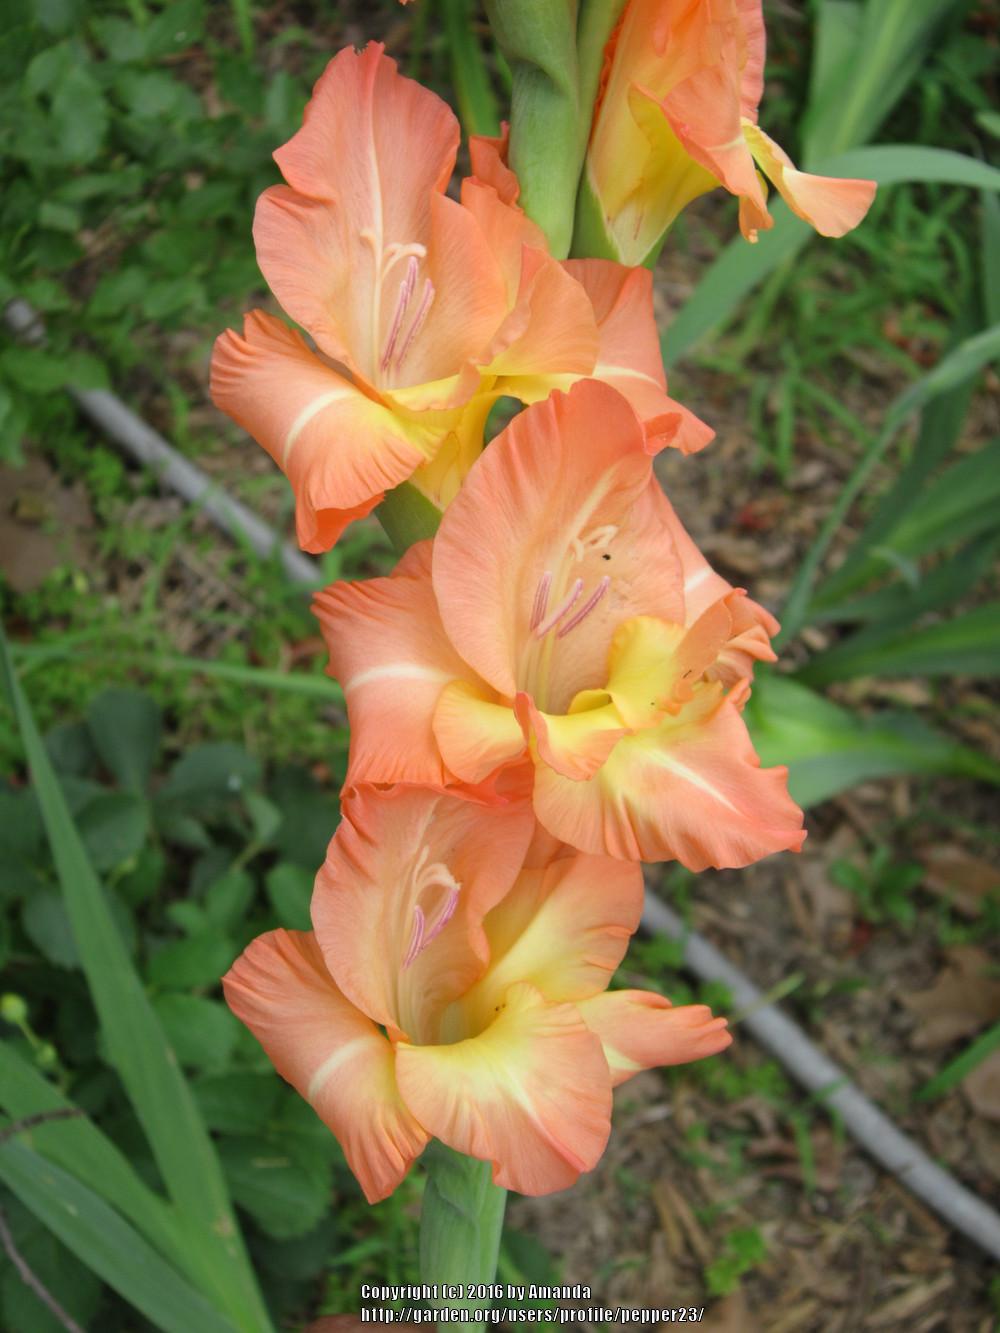 Photo of Gladiola (Gladiolus) uploaded by pepper23